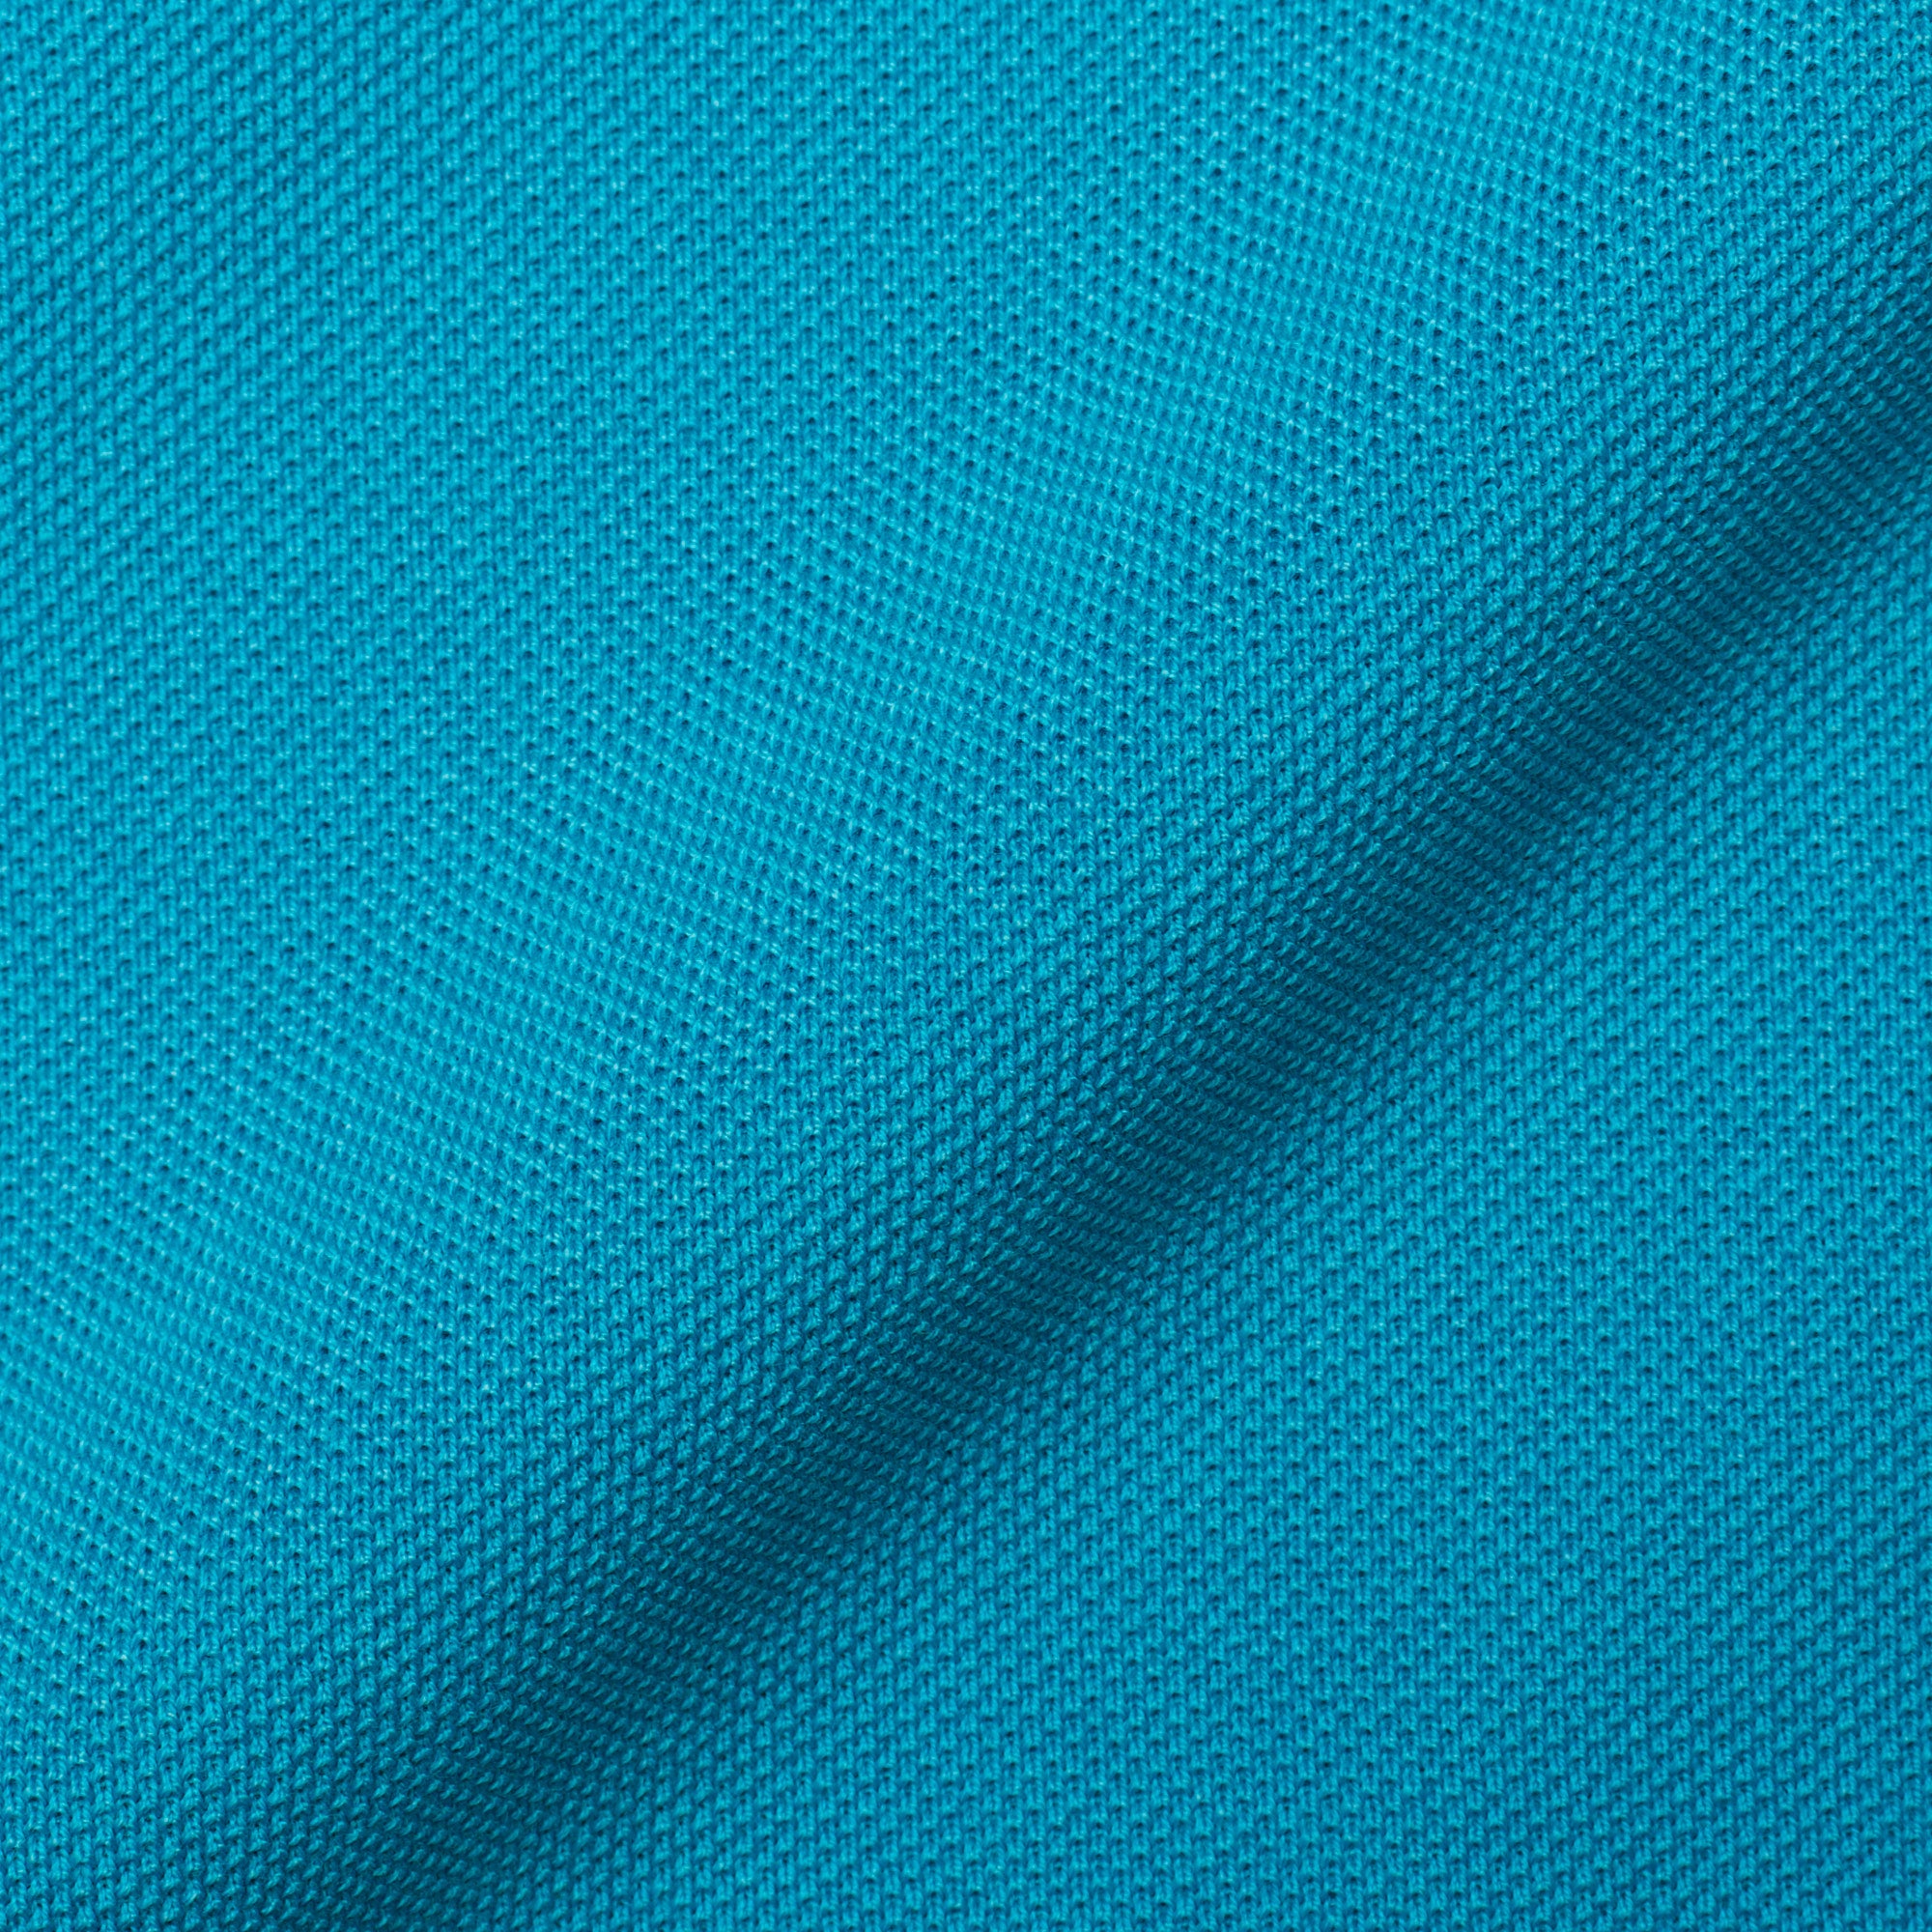 FEDELI 34 LAB "North" Teal Blue Cotton Pique Short Sleeve Polo Shirt EU 50 NEW US M